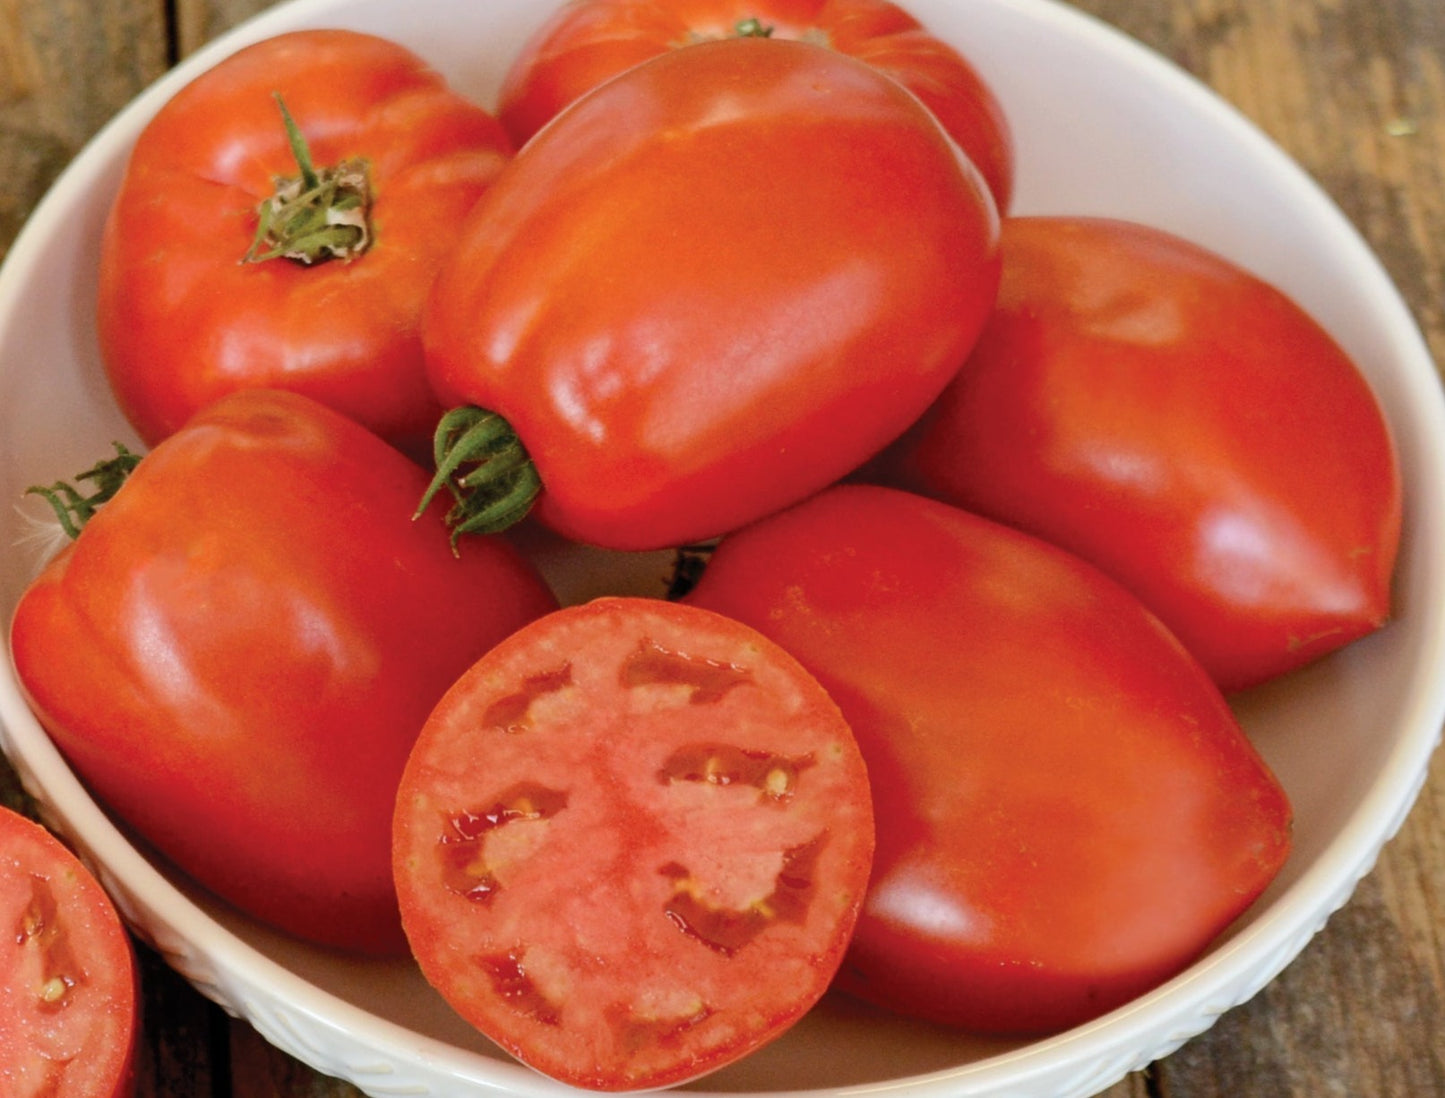 Oregon Star Tomato